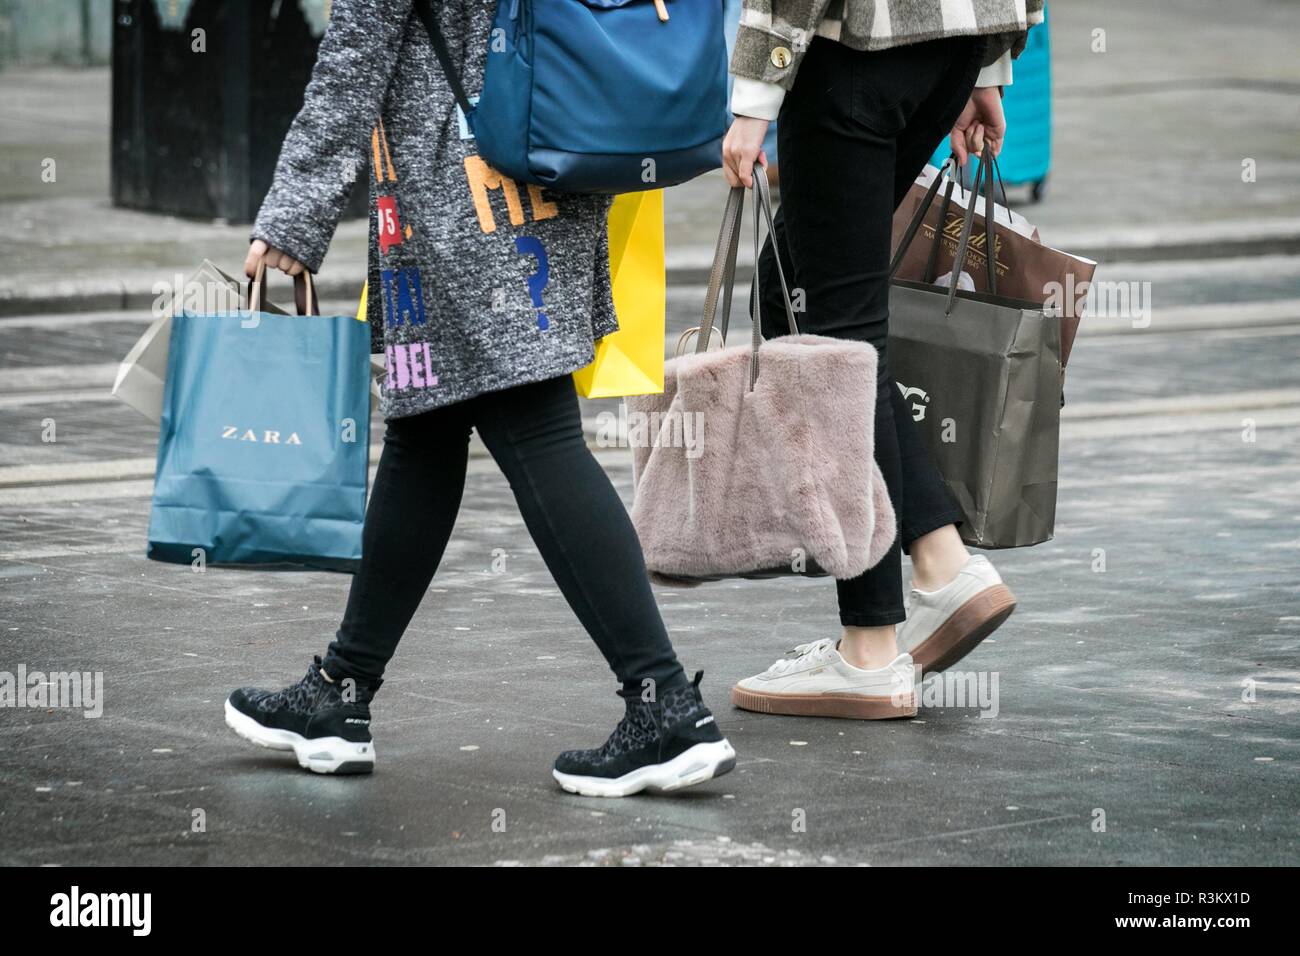 Zara carrying bag hi-res stock photography and images - Alamy